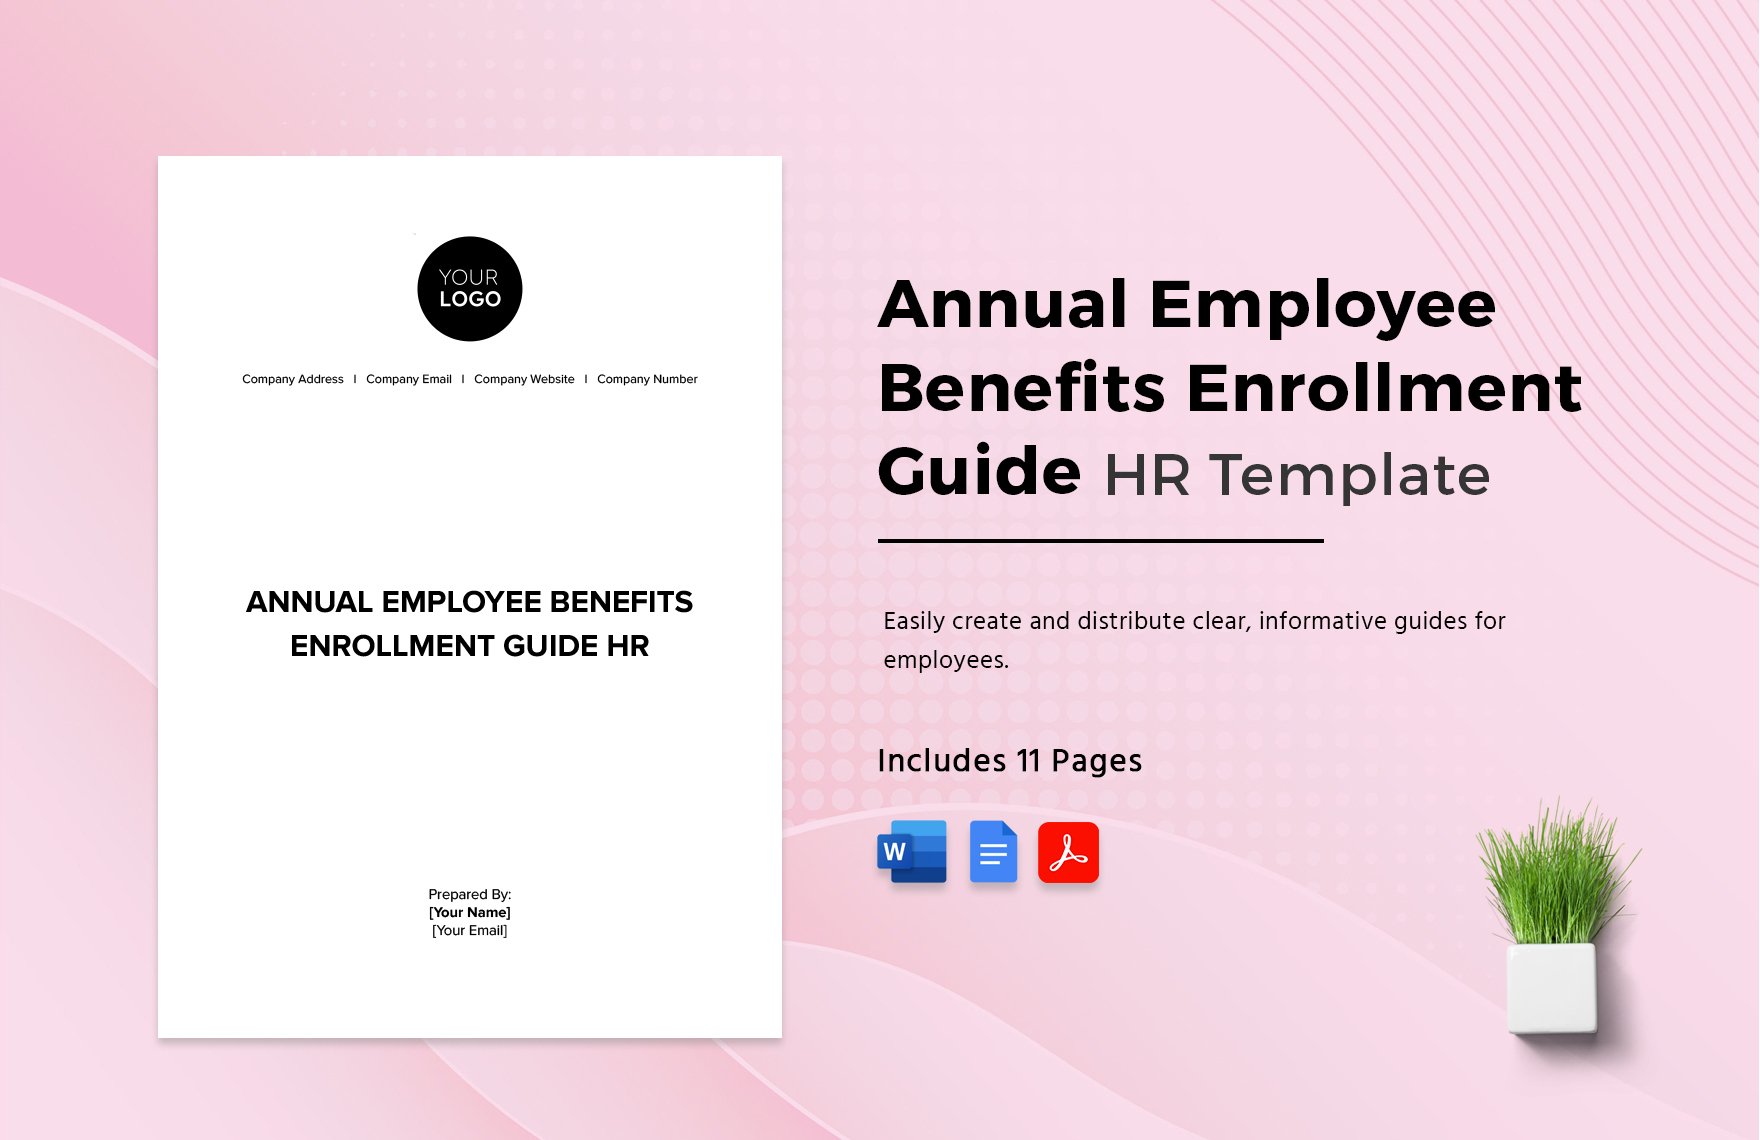 Annual Employee Benefits Enrollment Guide HR Template